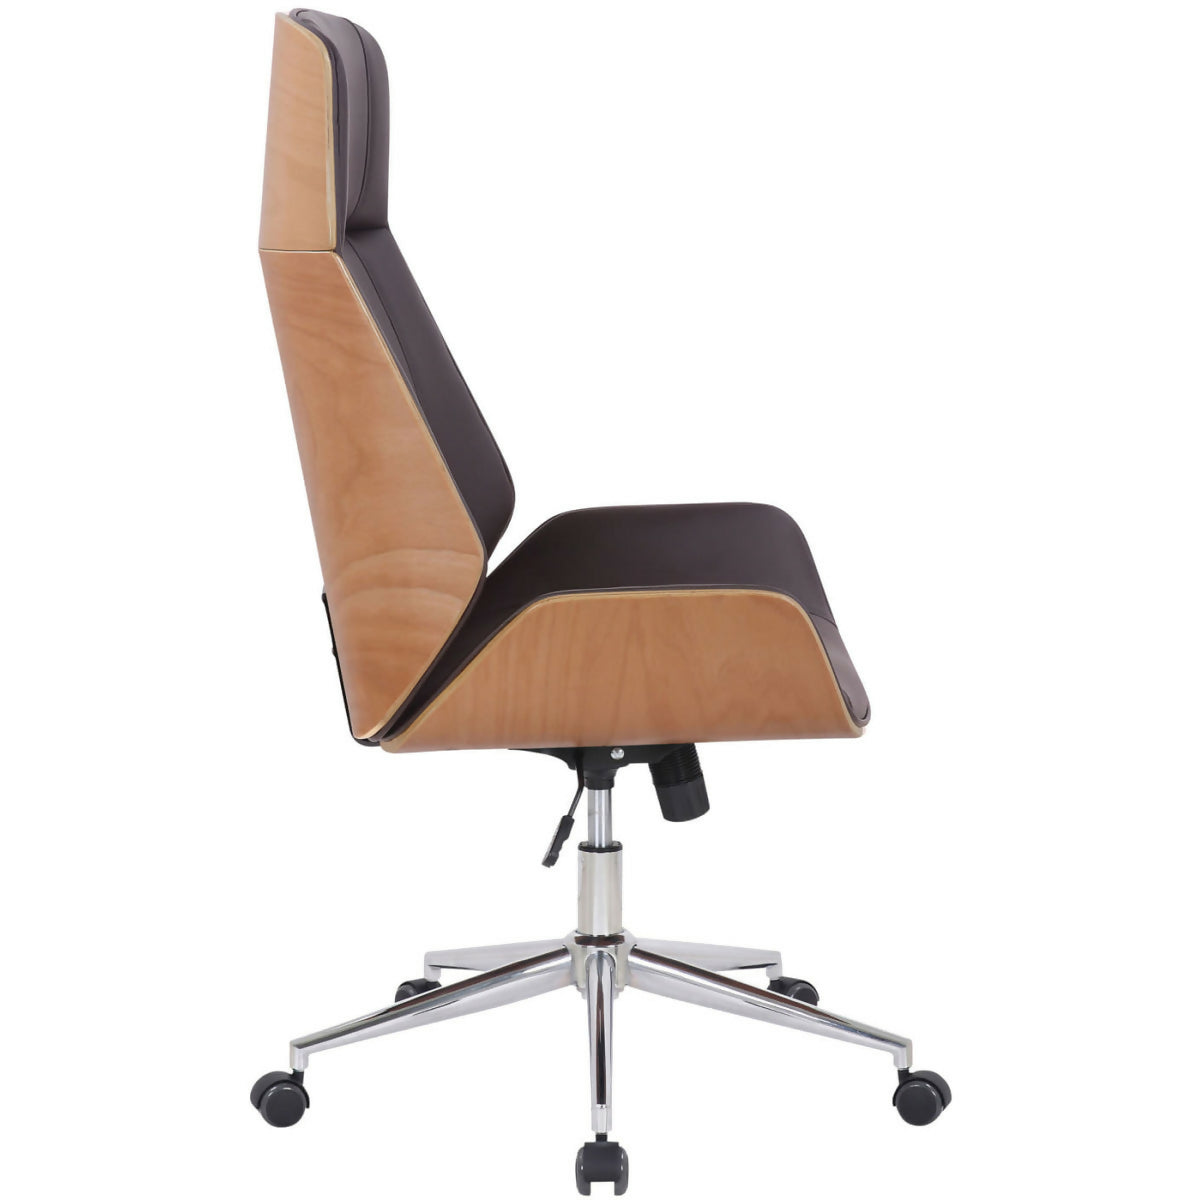 Varel office armchair - Natural wood - brown